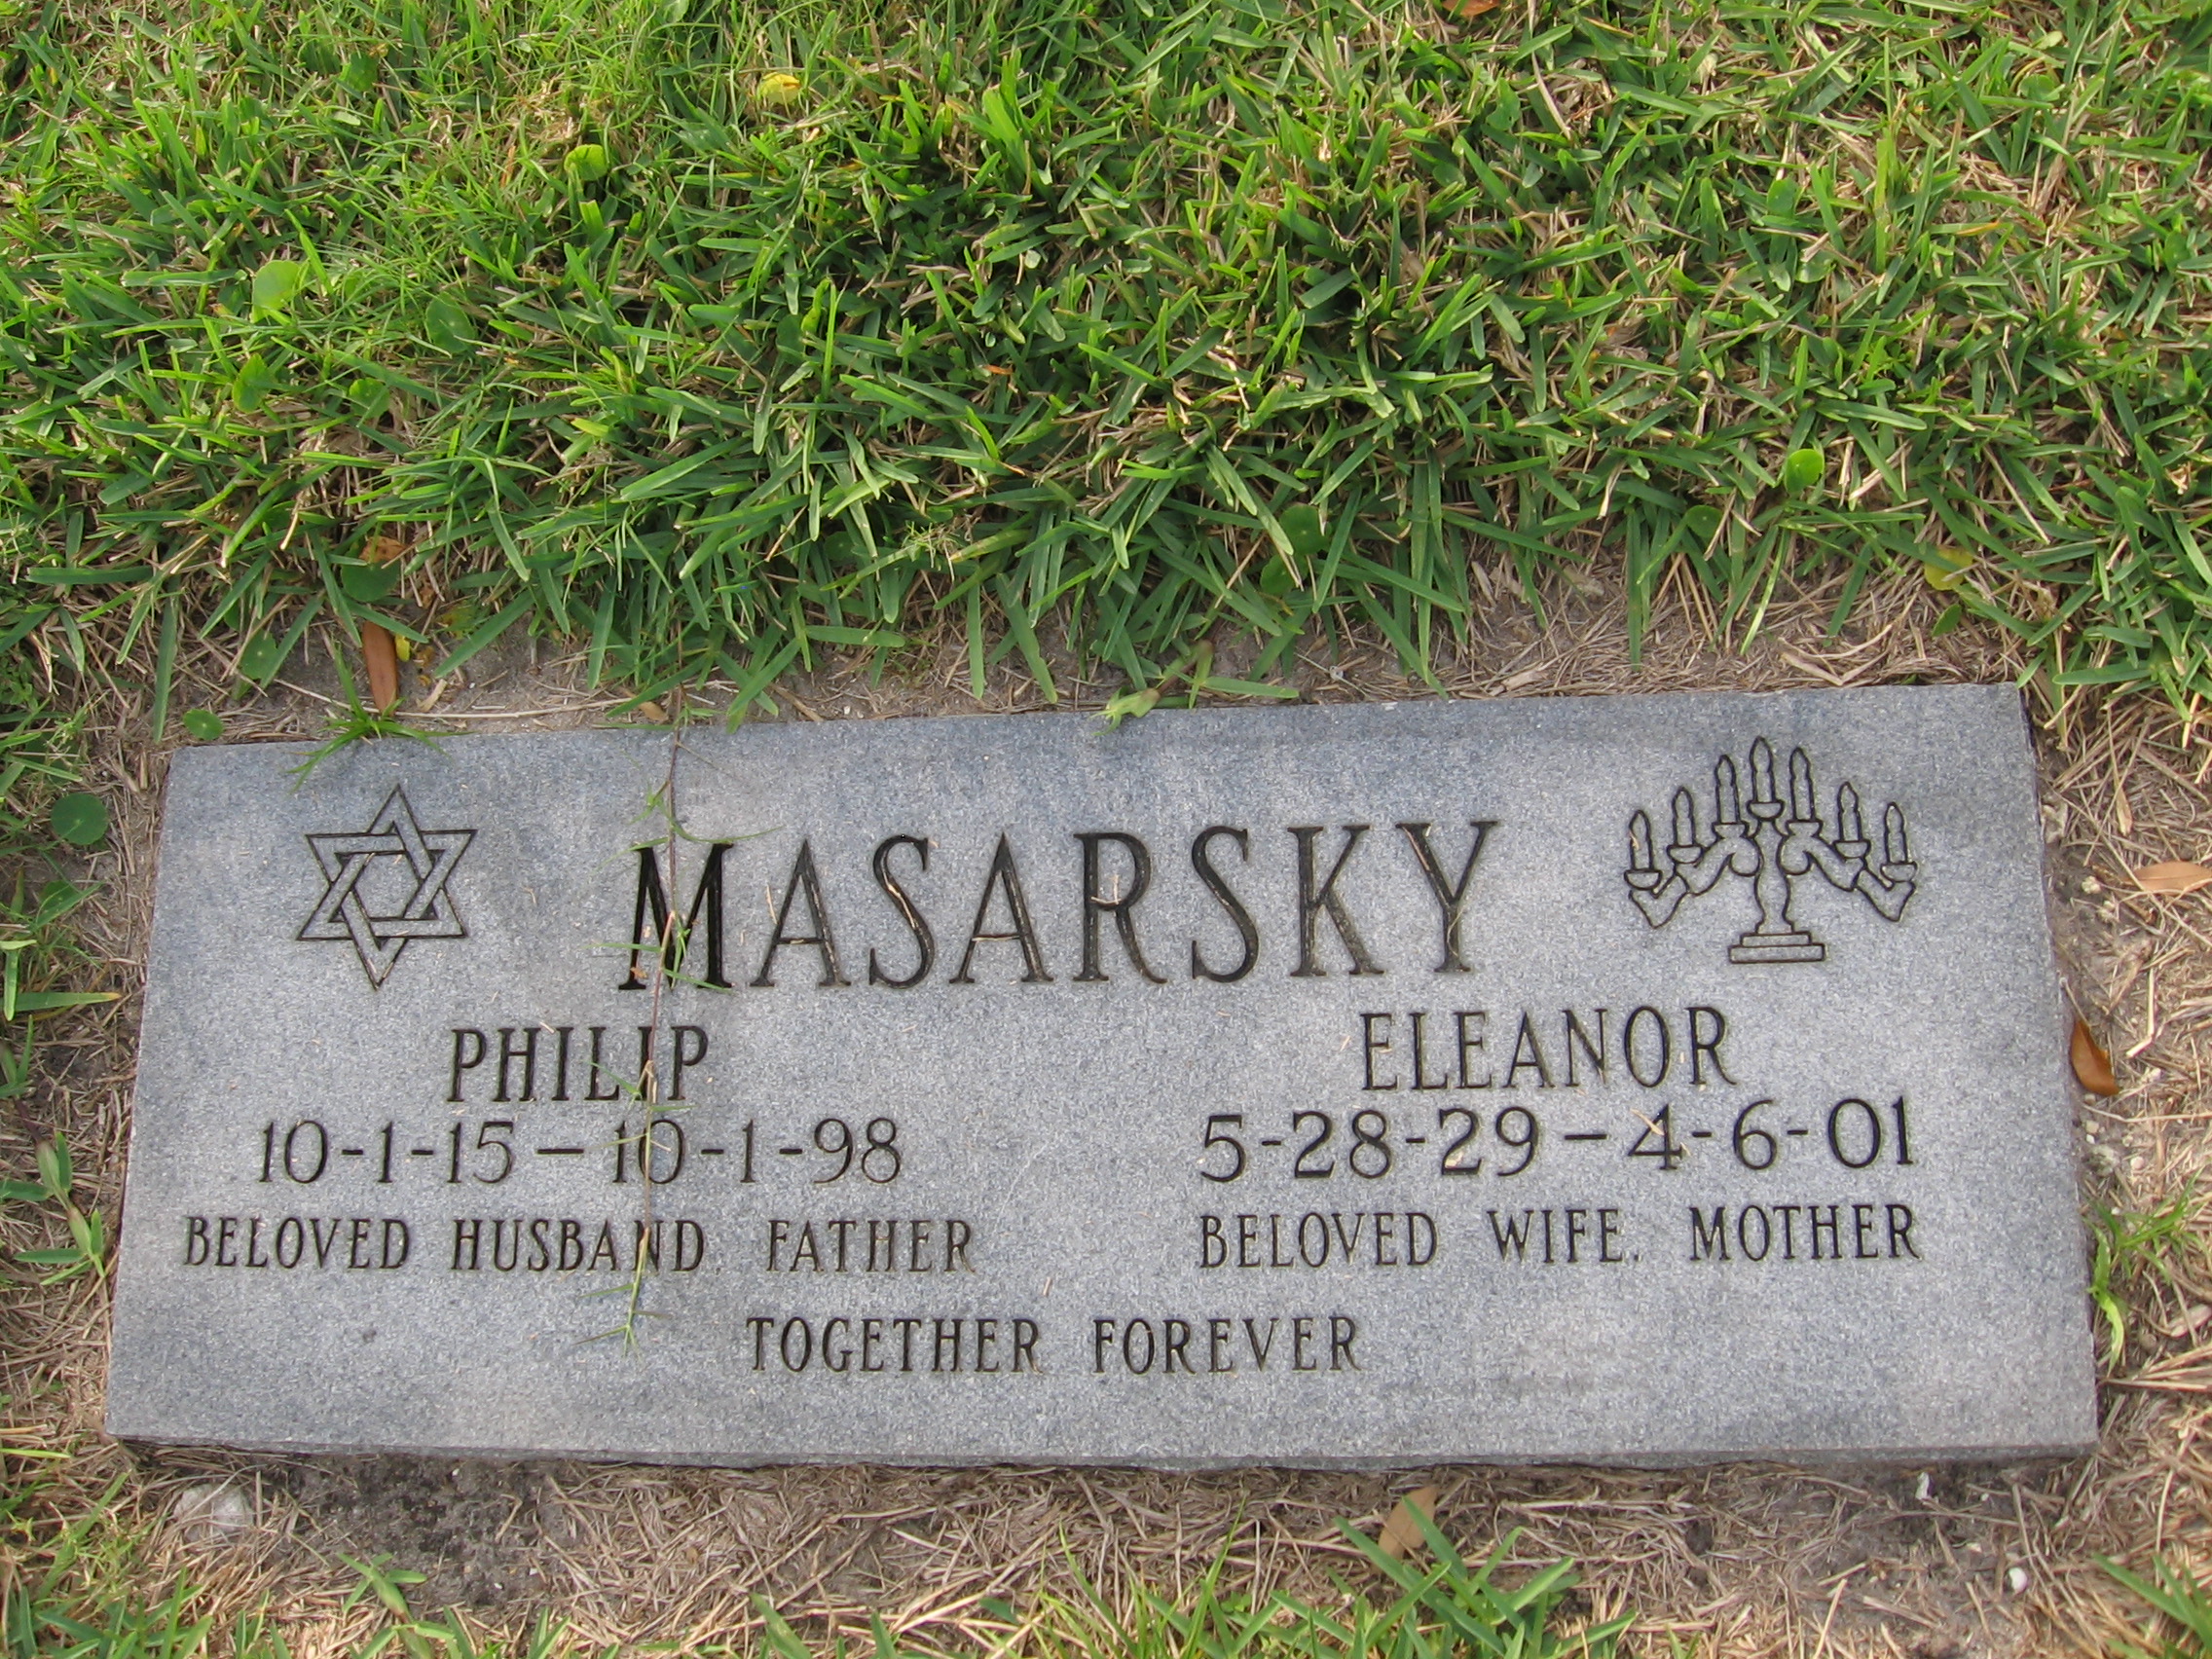 Philip Masarsky